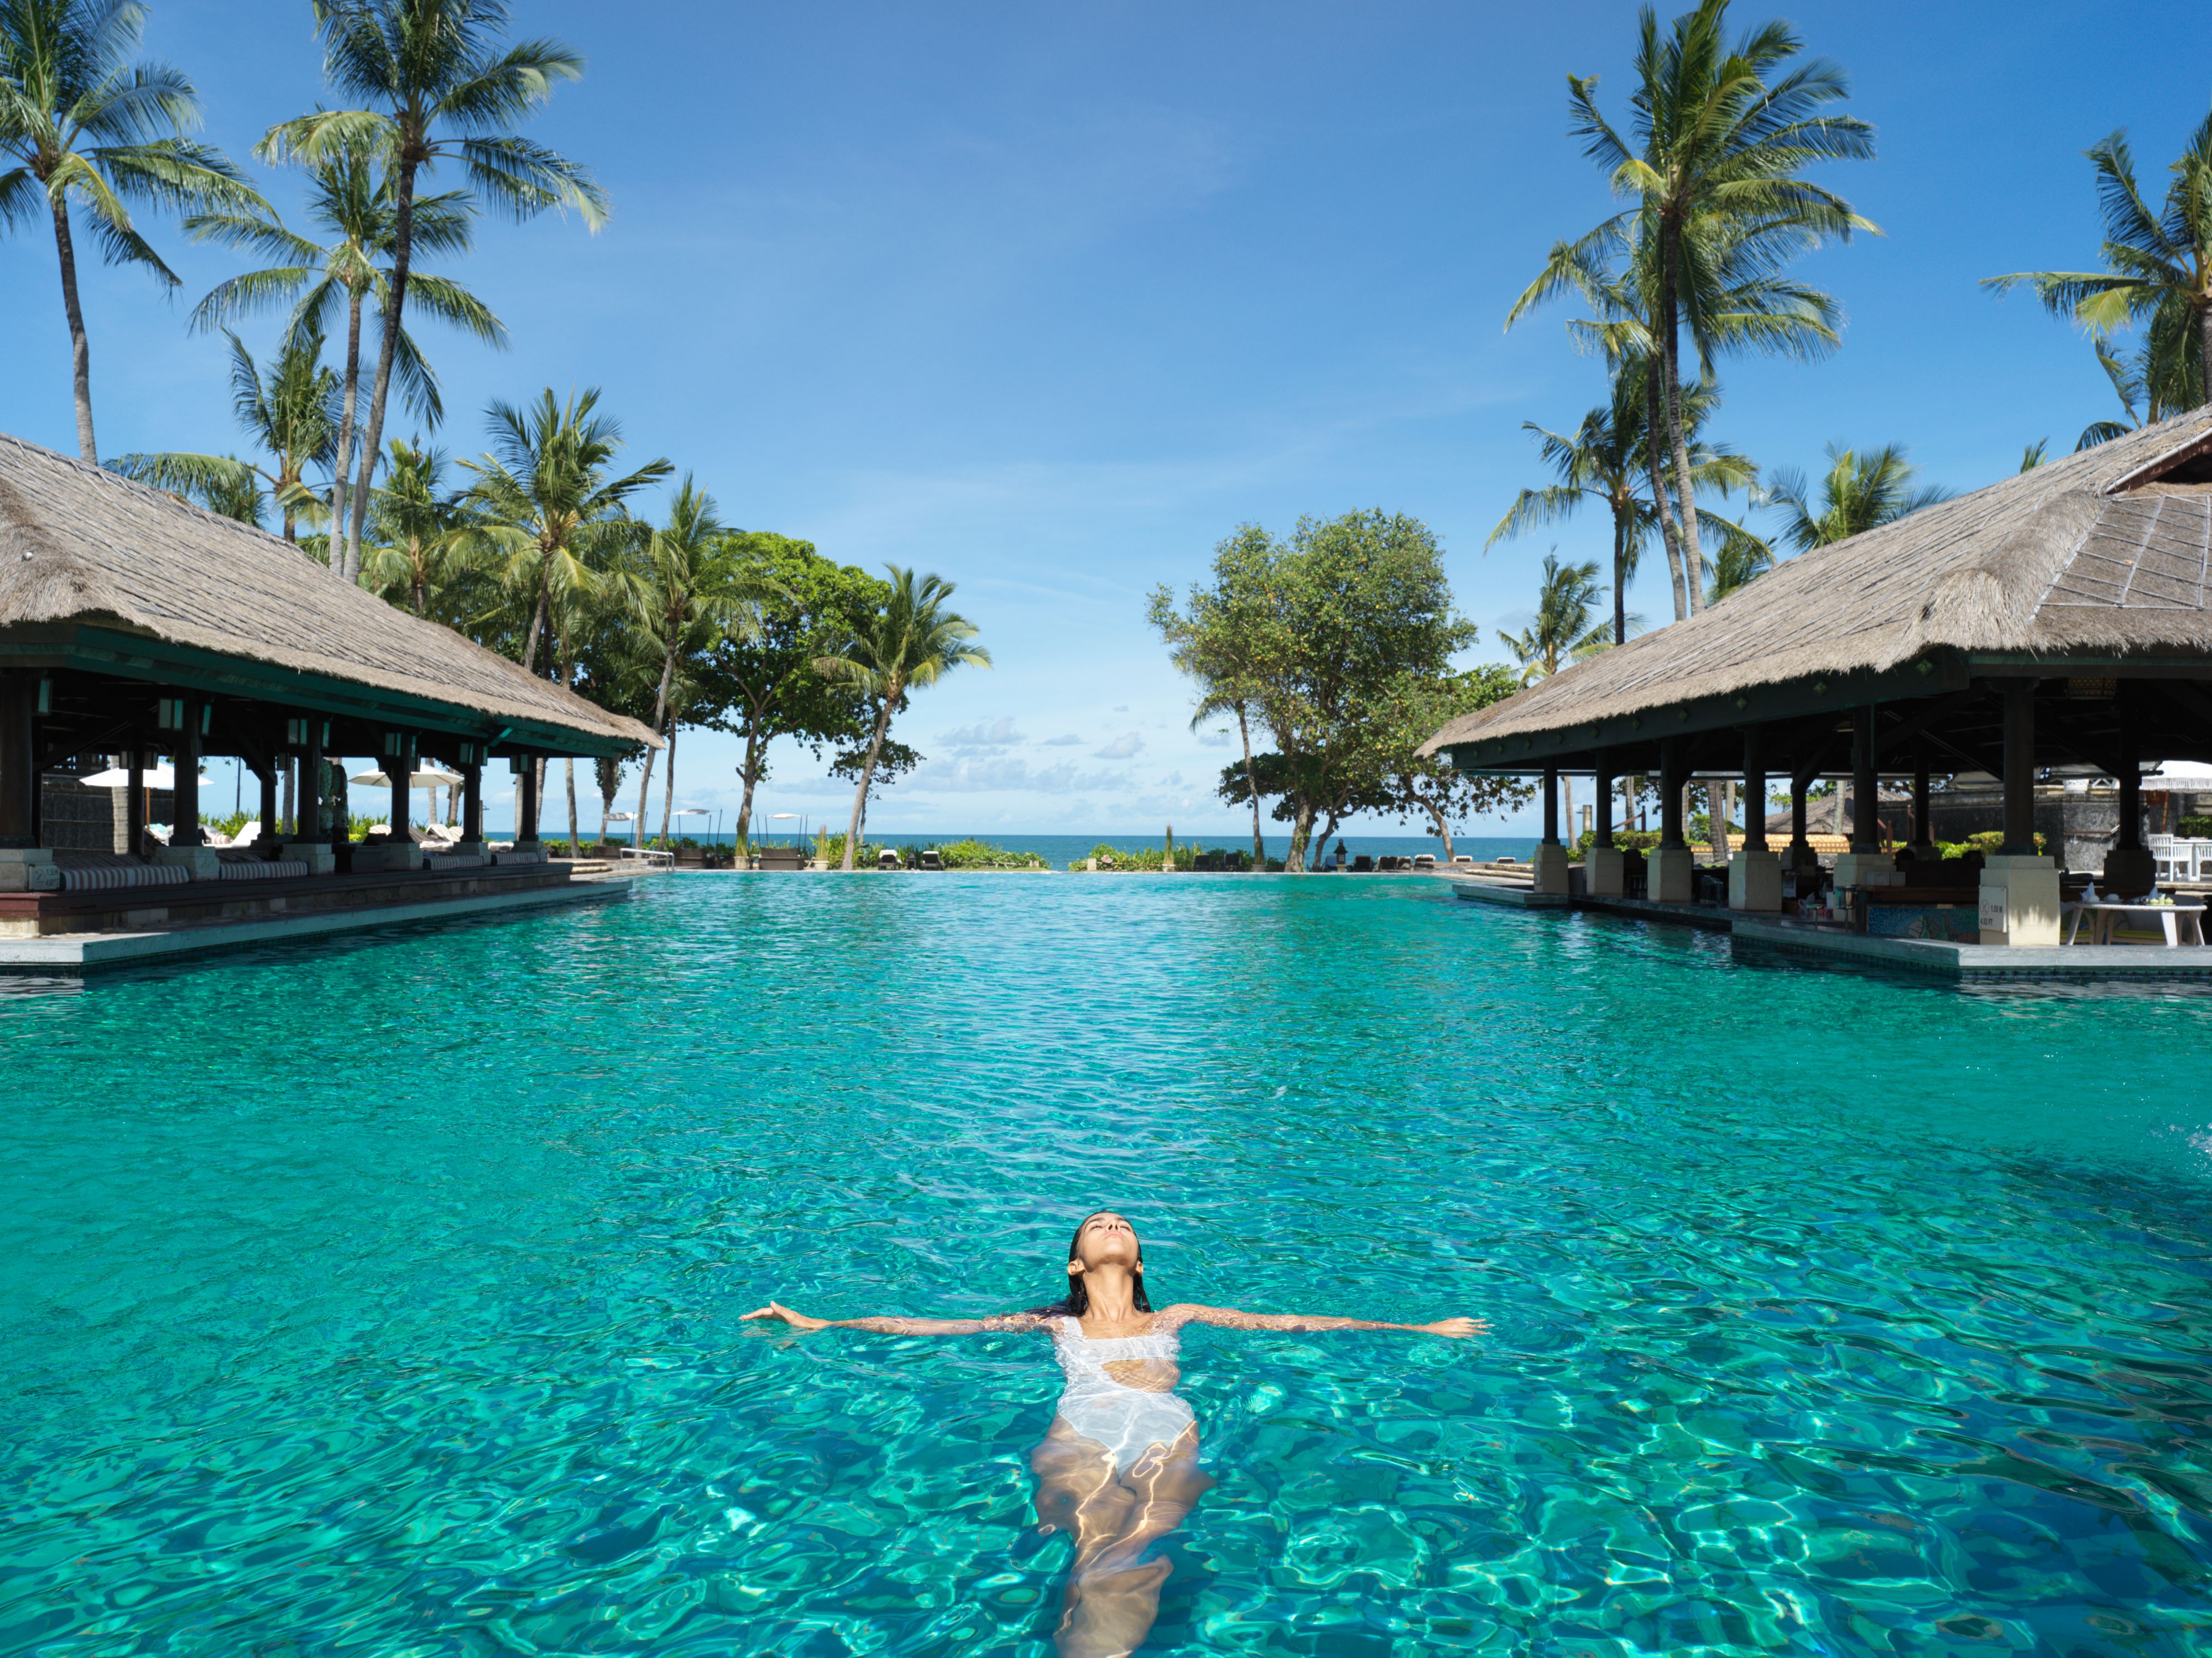 InterContinental Bali Resort - Bali